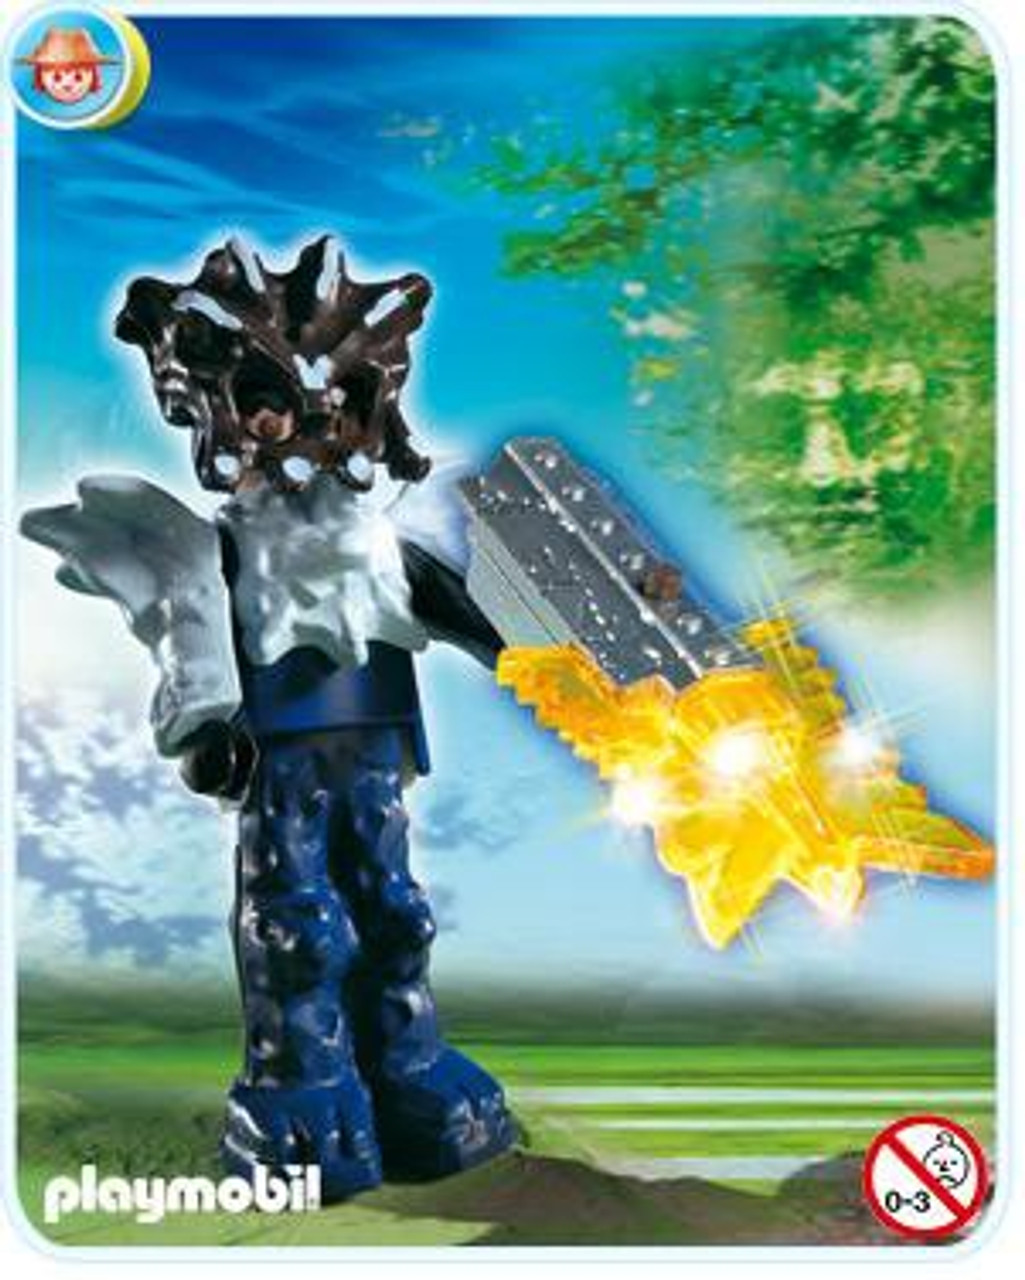 Playmobil Treasure Hunters Temple Guard With Orange Light Set 4849 Toywiz - roblox monster mash potion roblox high school 2